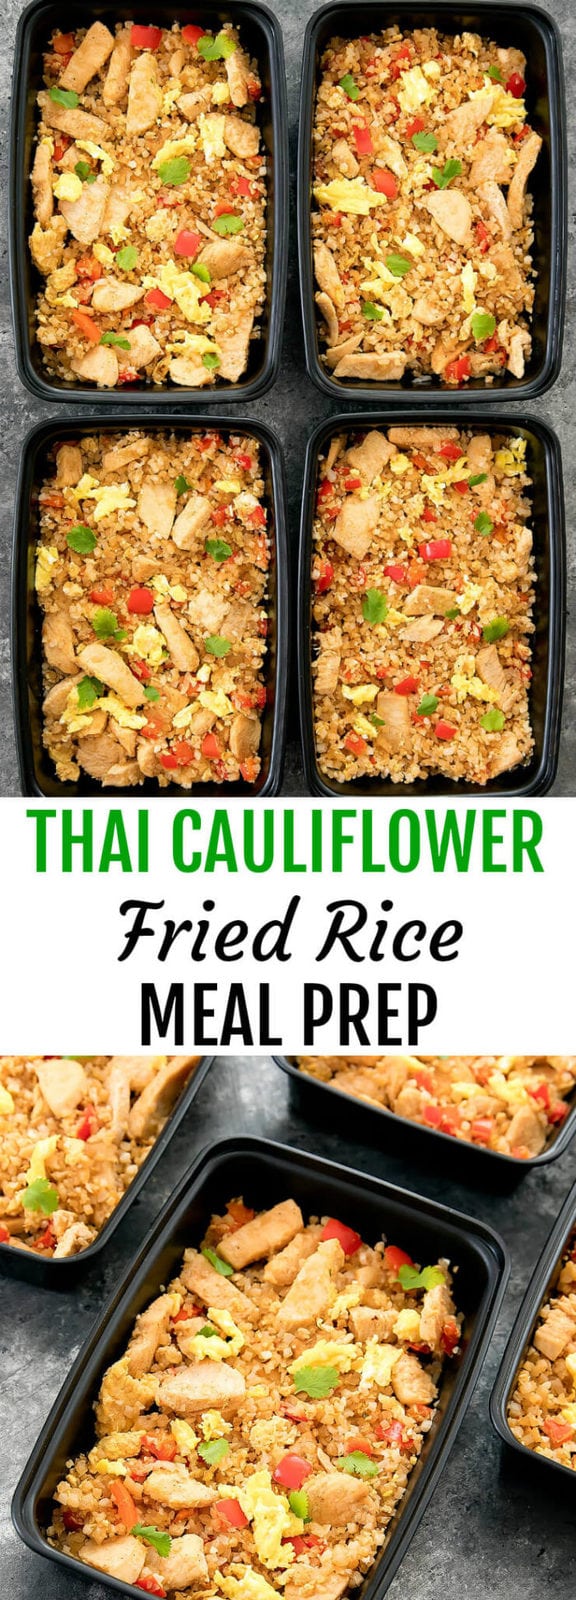 Thai Cauliflower Fried Rice Meal Prep